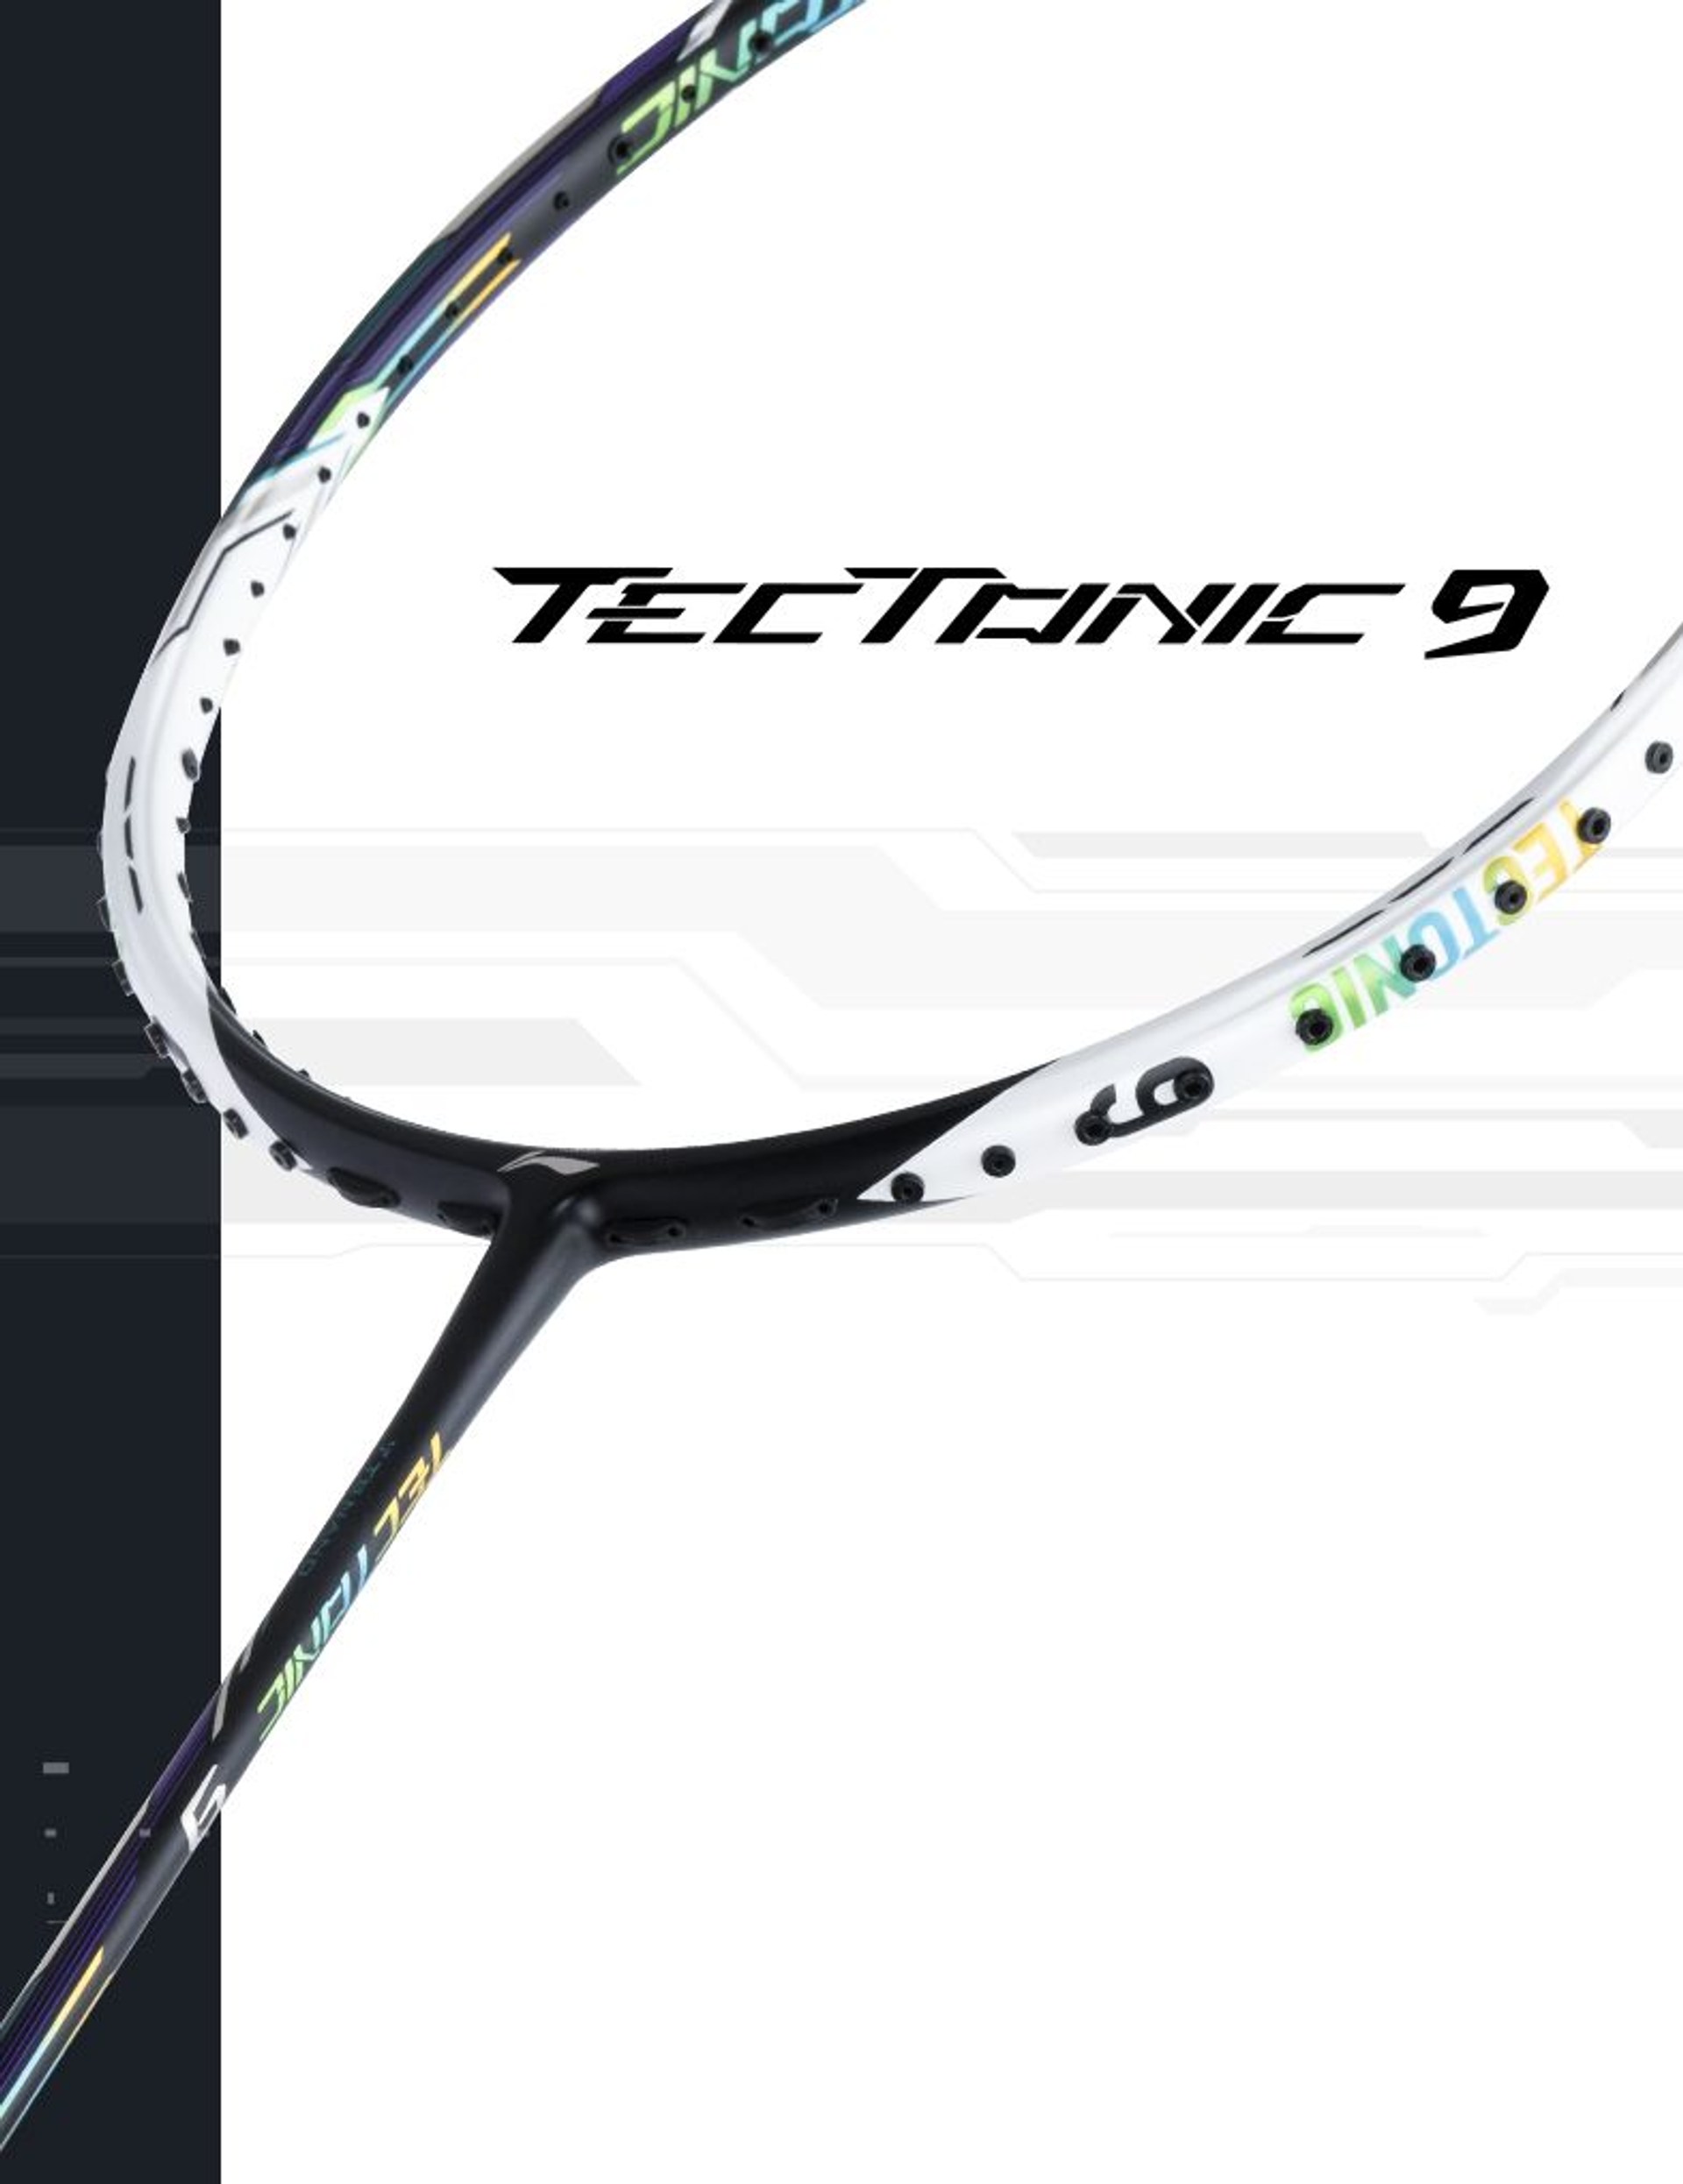 Close up of Tectonic 9 Badminton racket by Li-Ning Studio